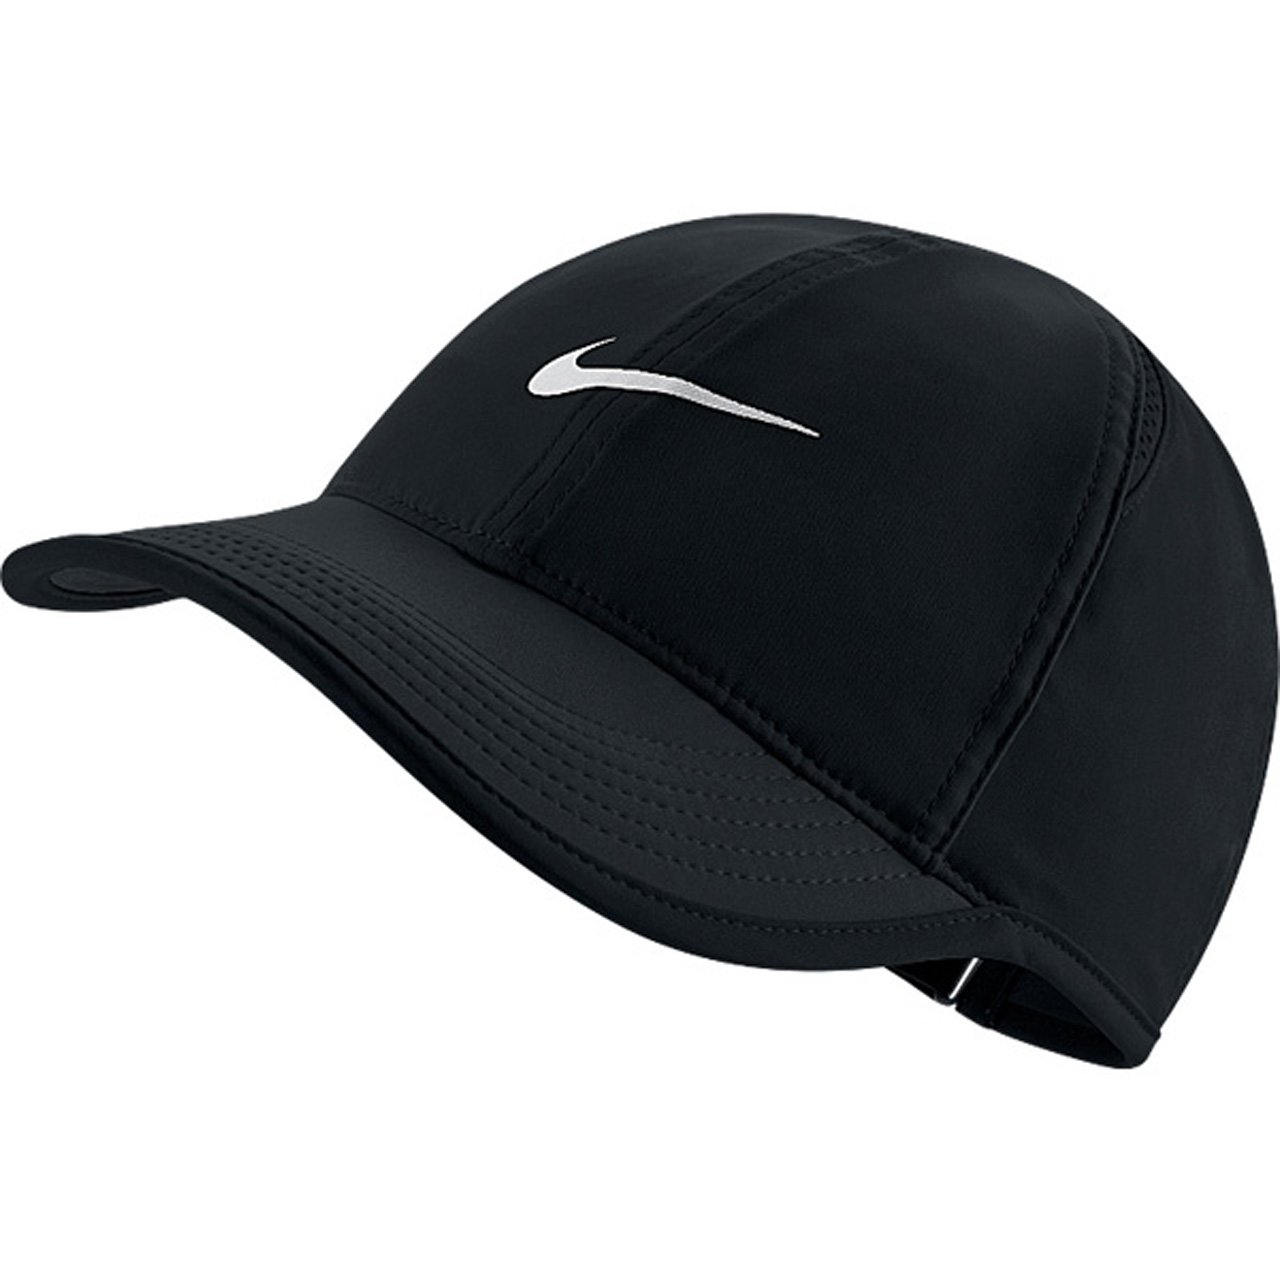 Women's Nike Featherlight Tennis Hat 679424 - image 1 of 2